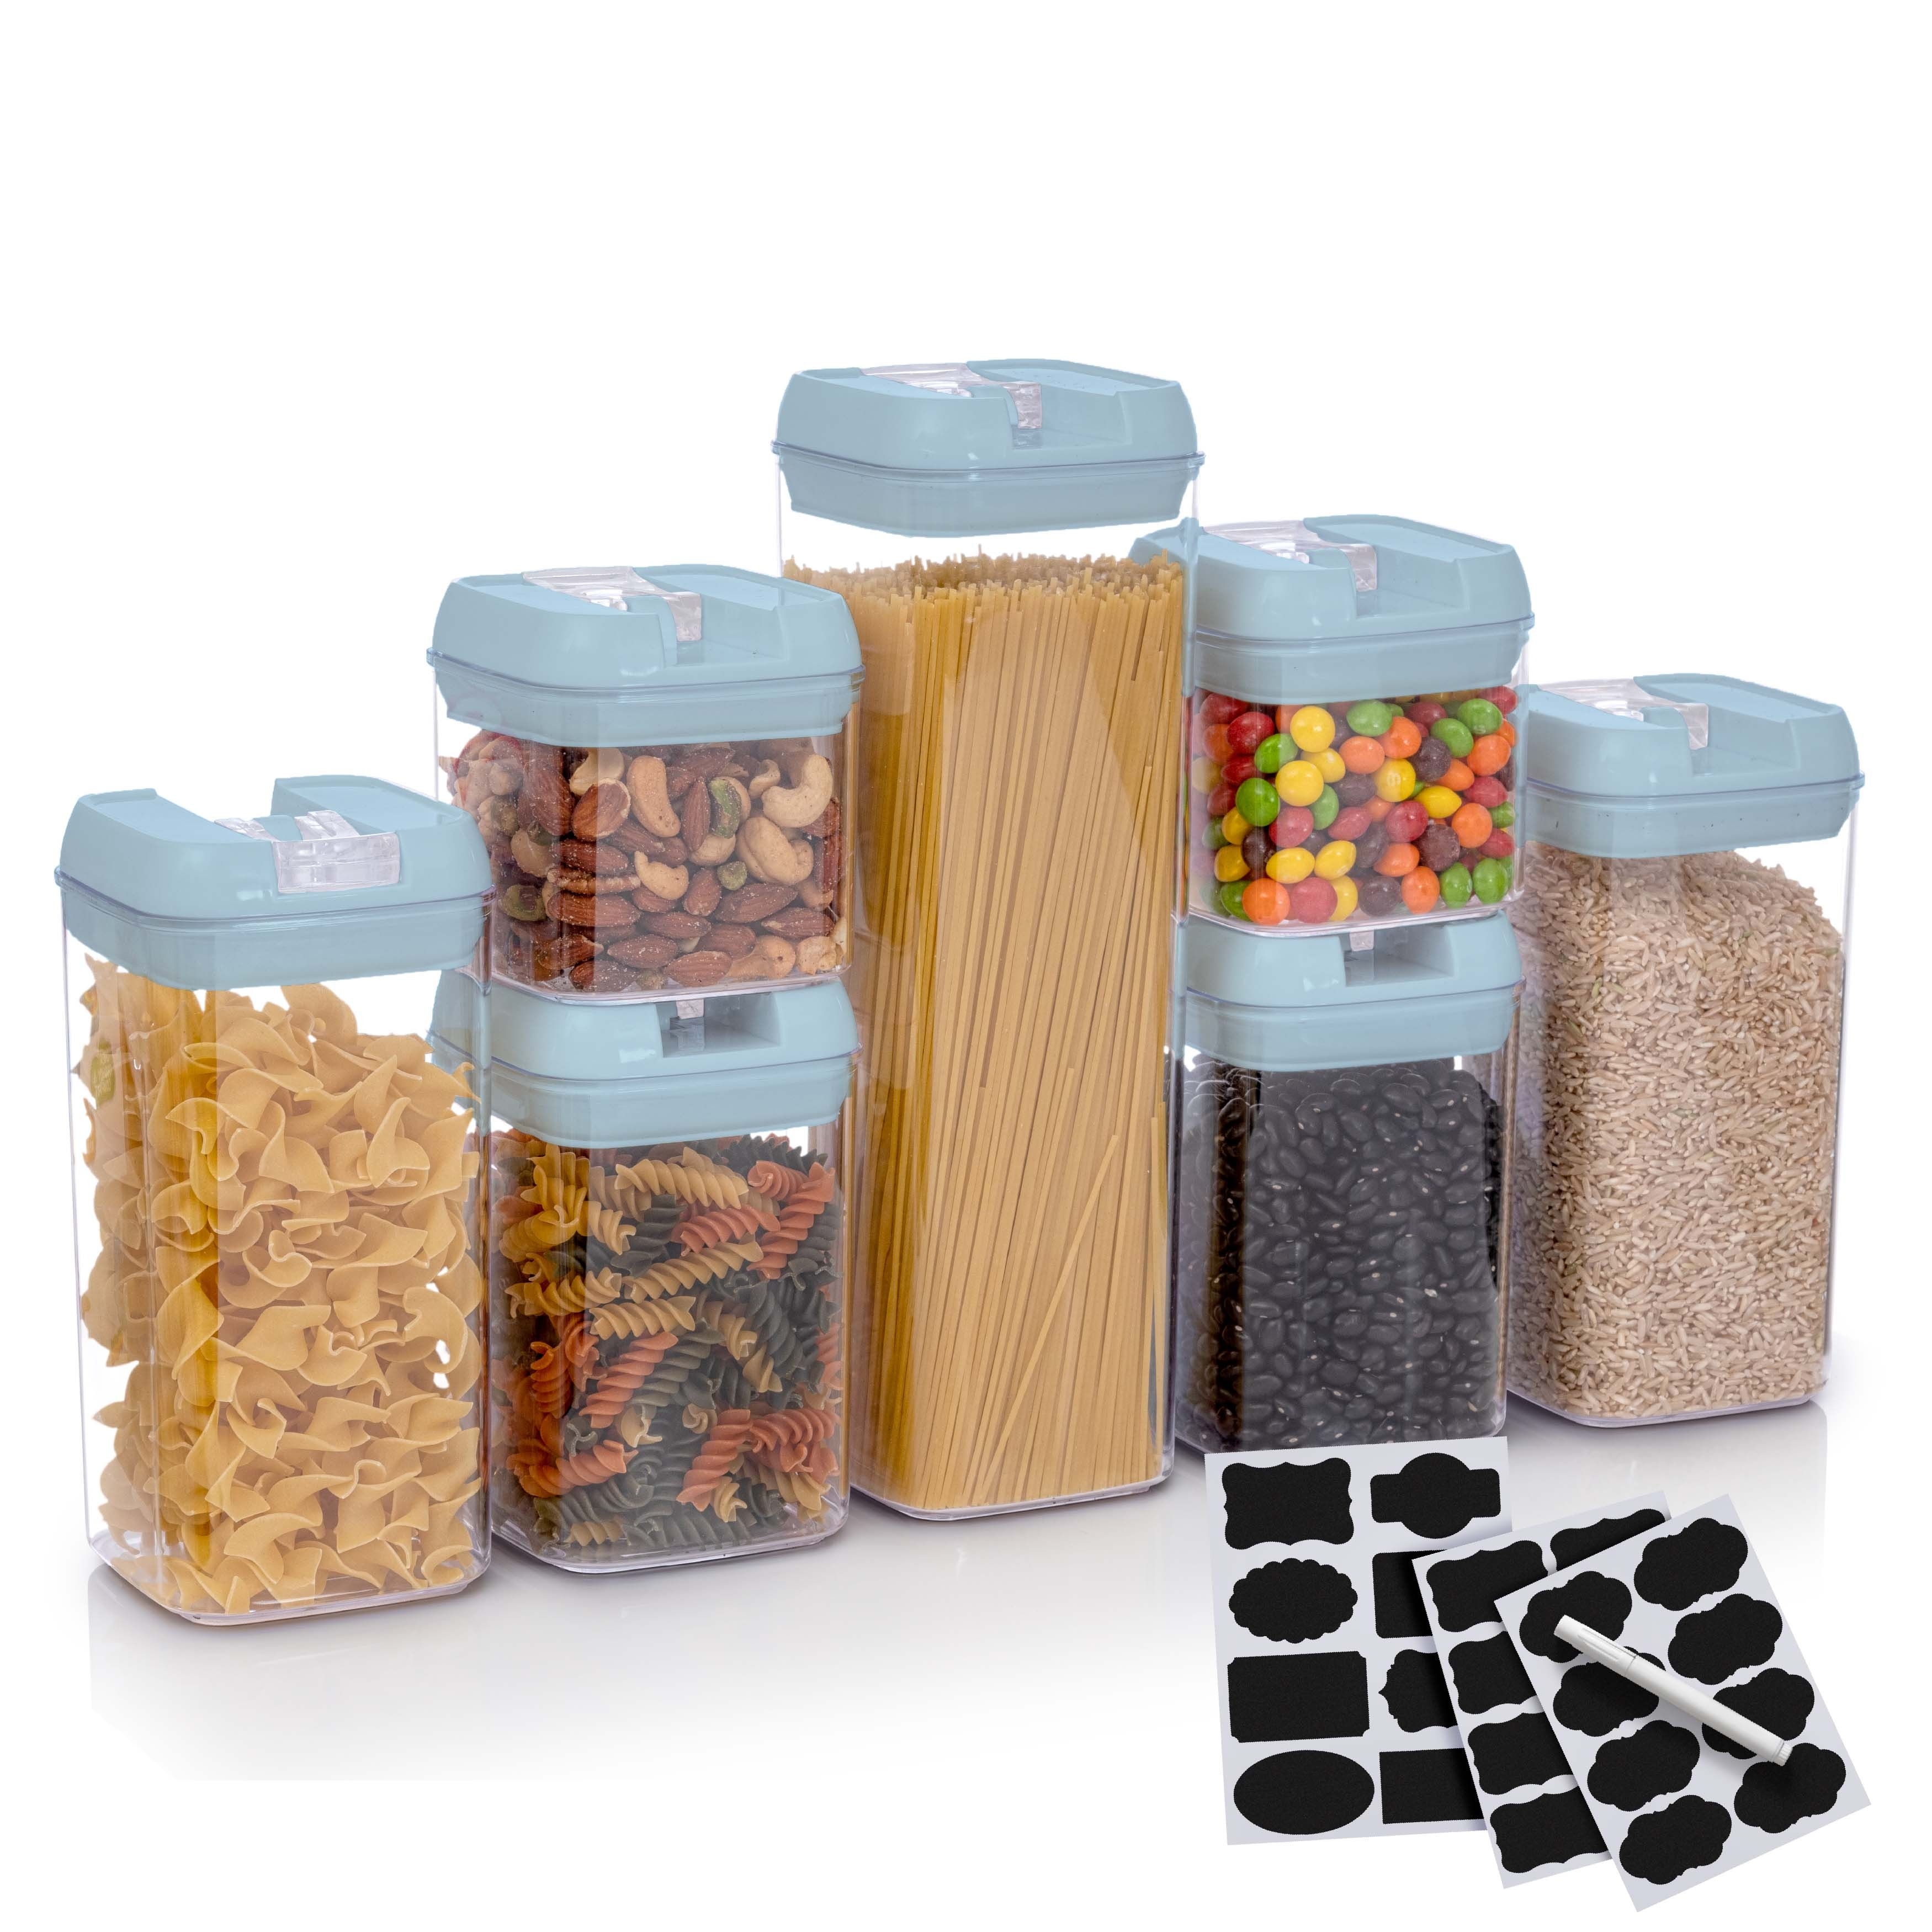 Stretch & Fresh 12-Piece Food Storage Container Set